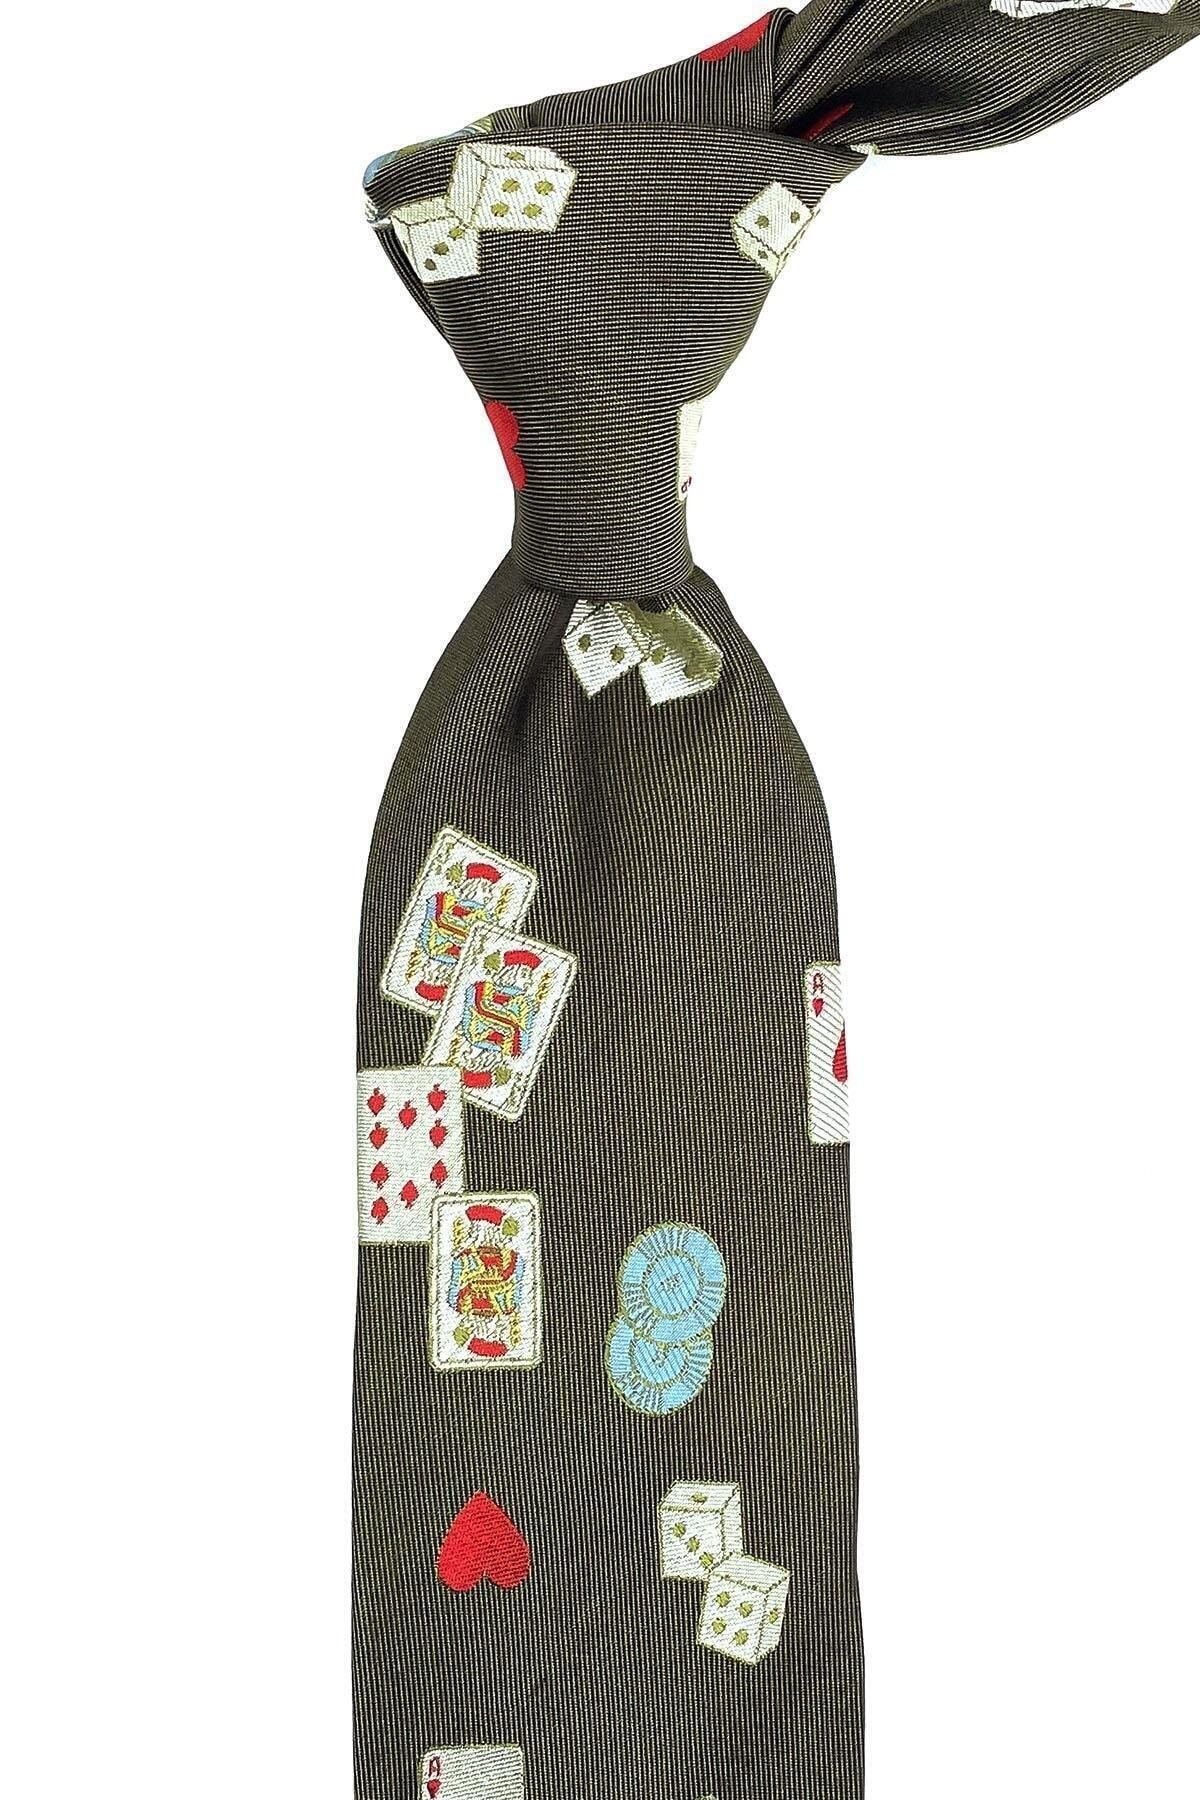 Kravatkolik Casinola Style Yeşil Poker Motif Italyan Ipek Kravat Ik1224